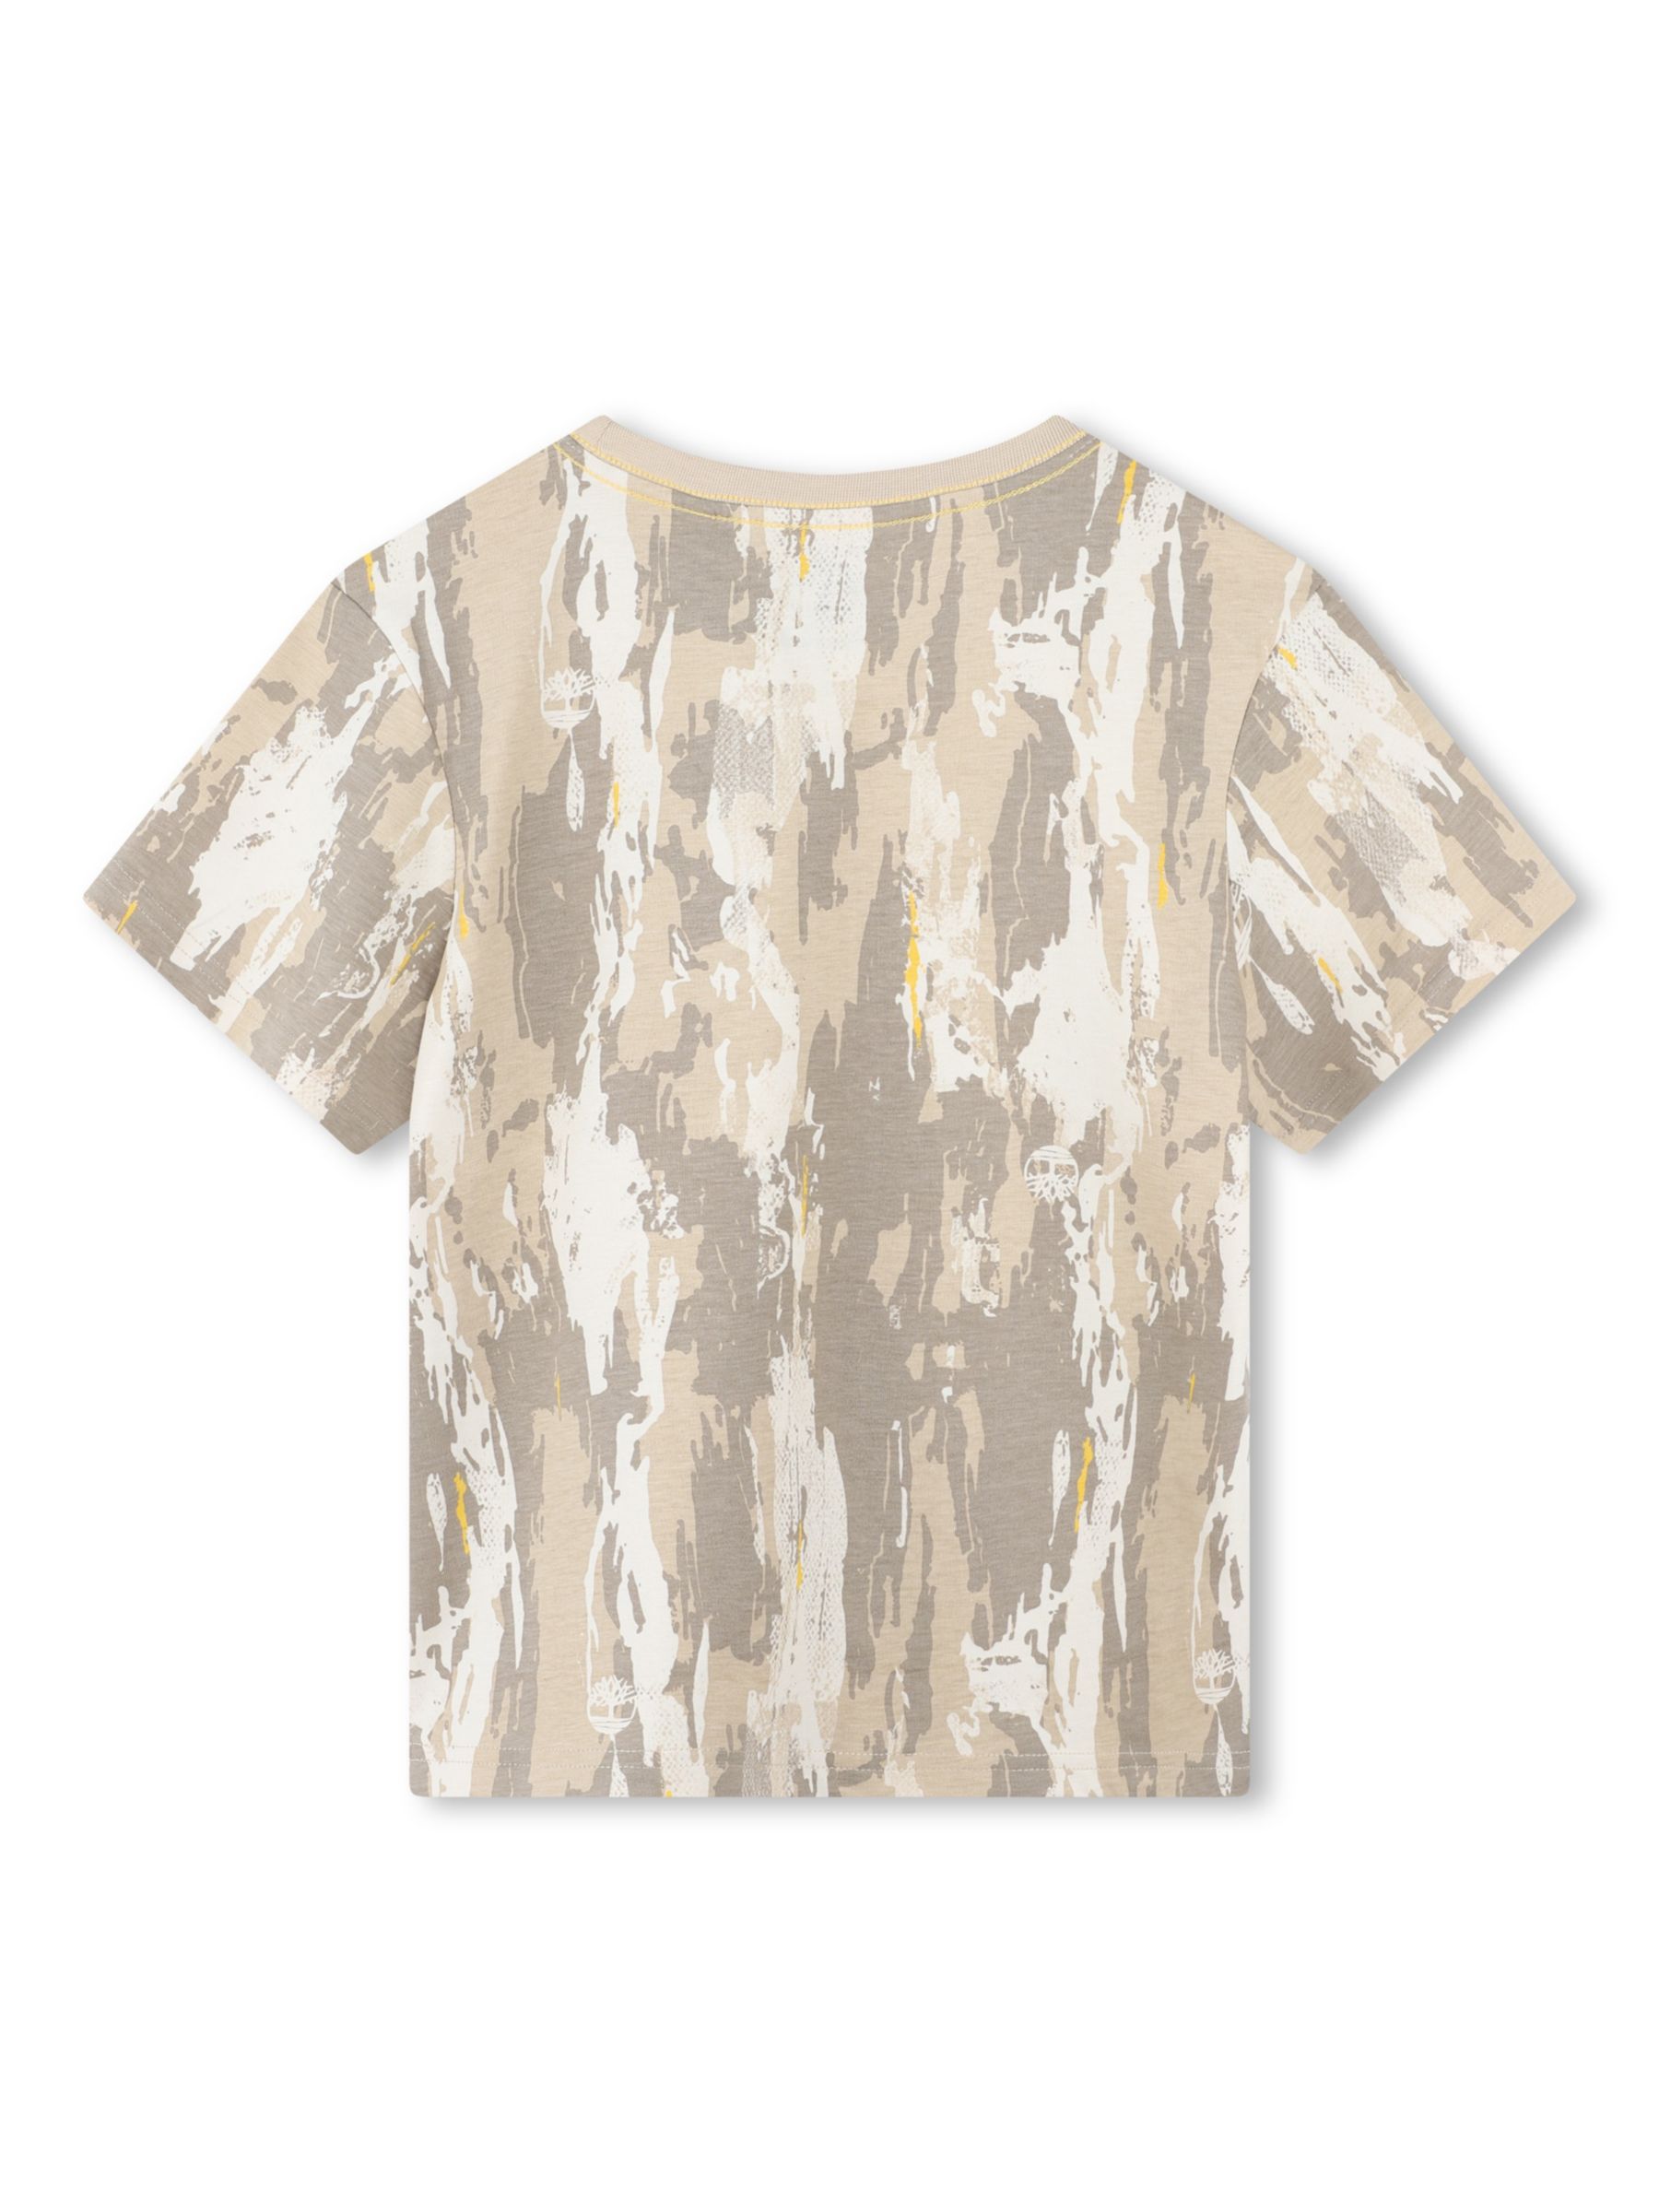 Timberland Kids' Fancy Logo Abstract Print T-Shirt, Natural, 4 years